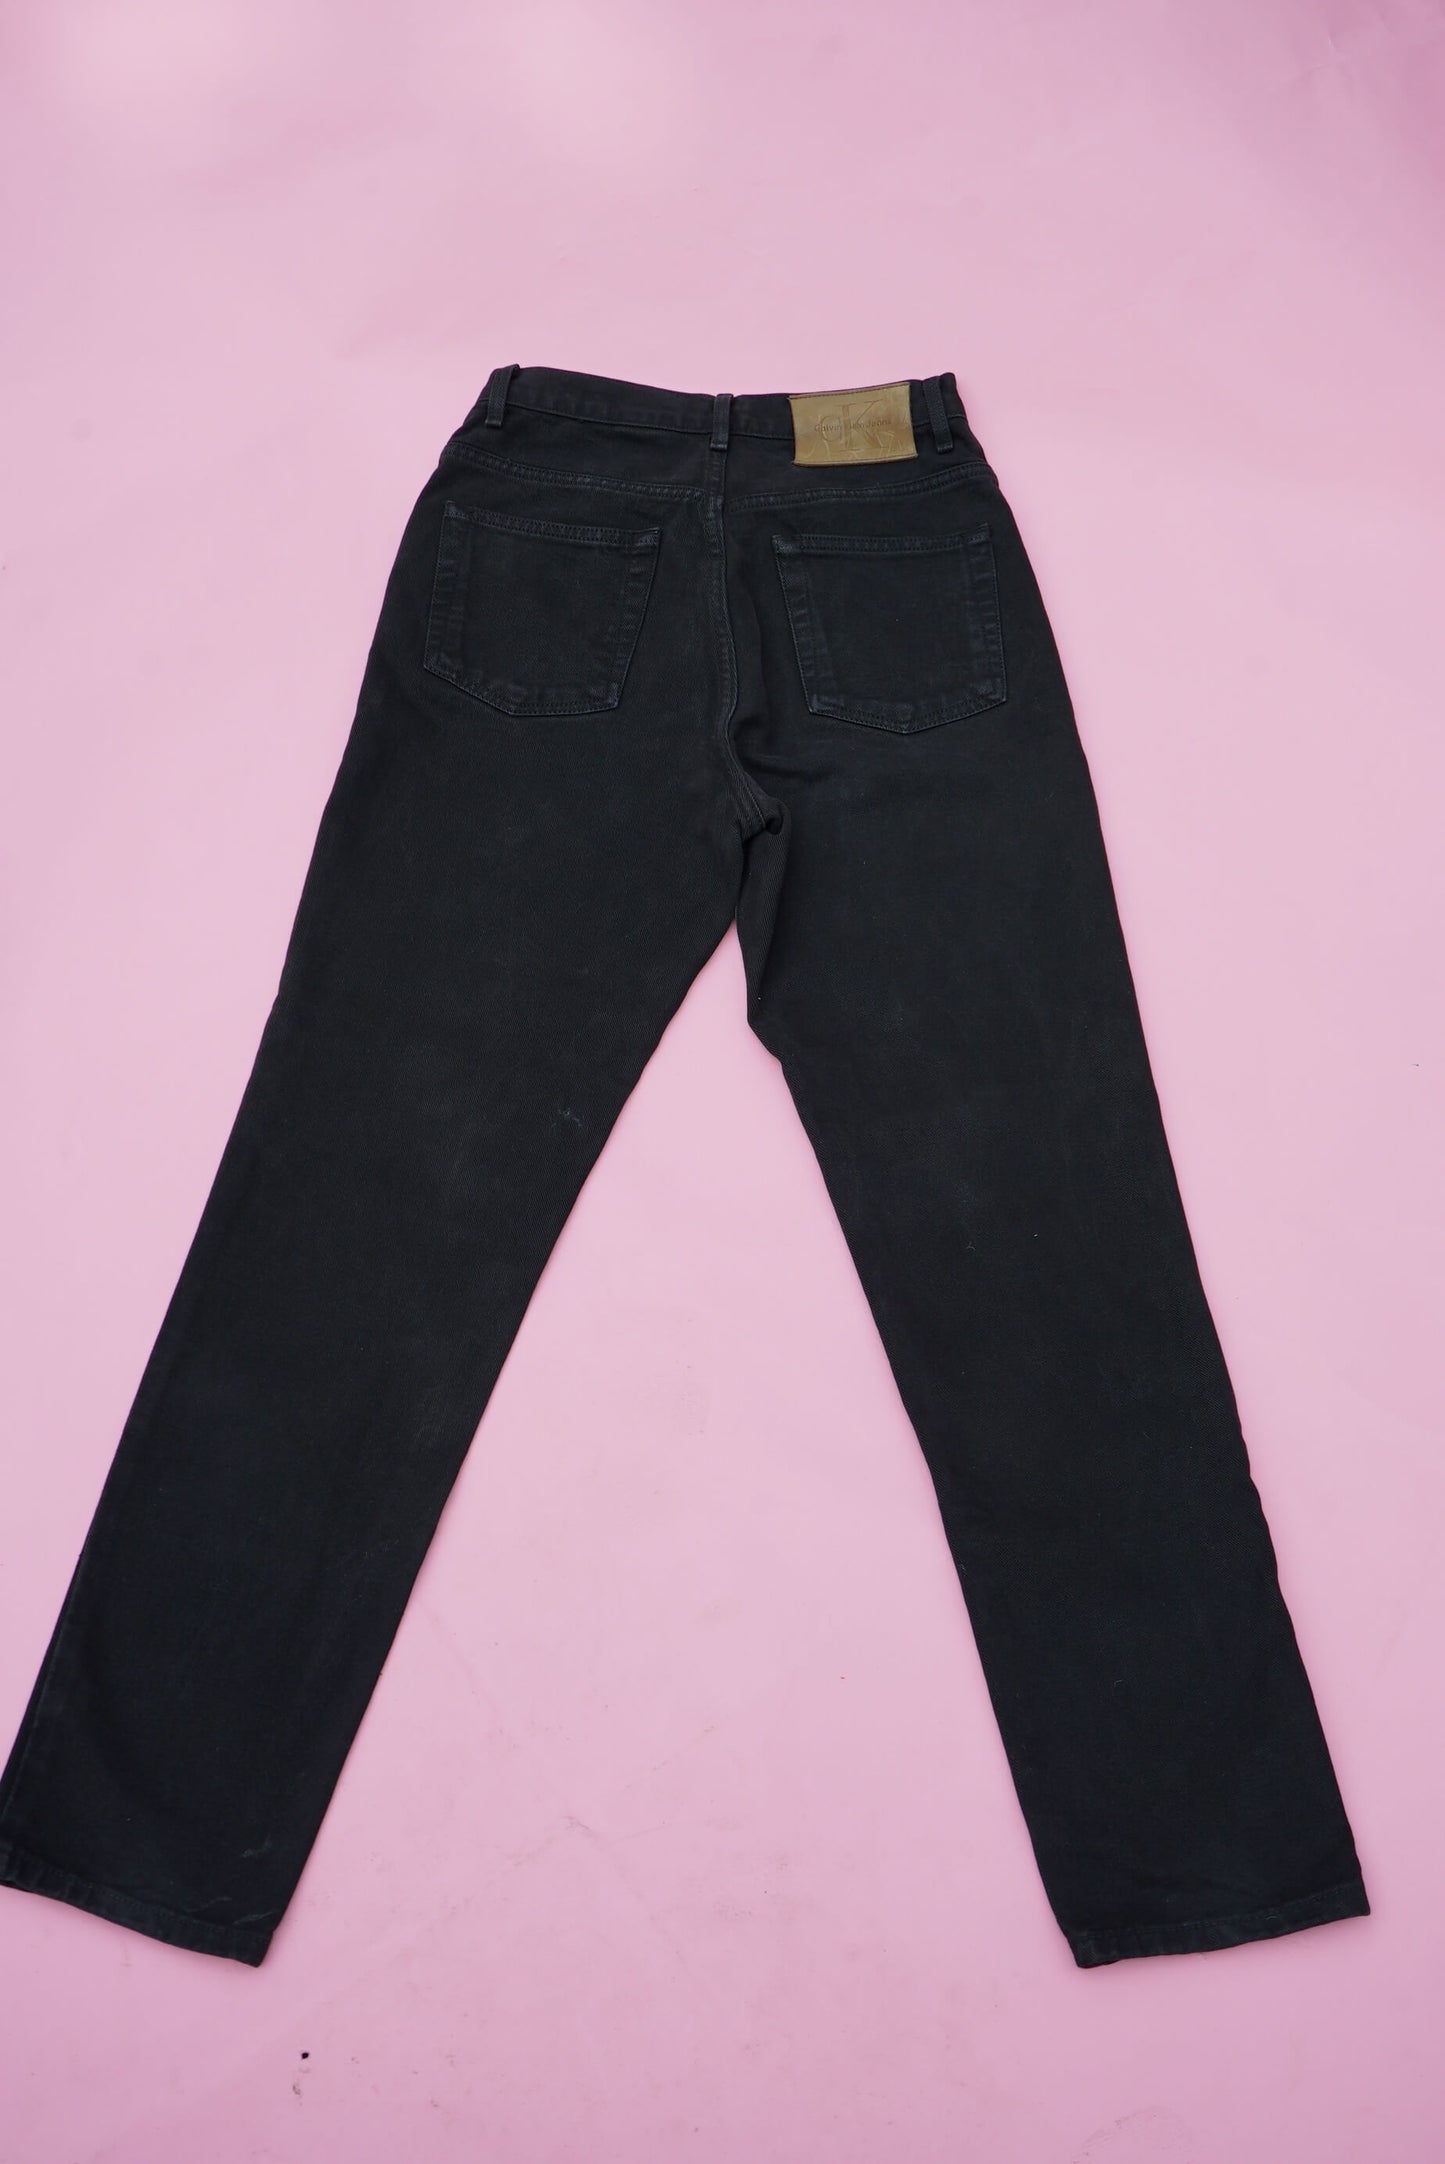 Black Vintage Calvin Klein High Waisted Jeans Size S-M